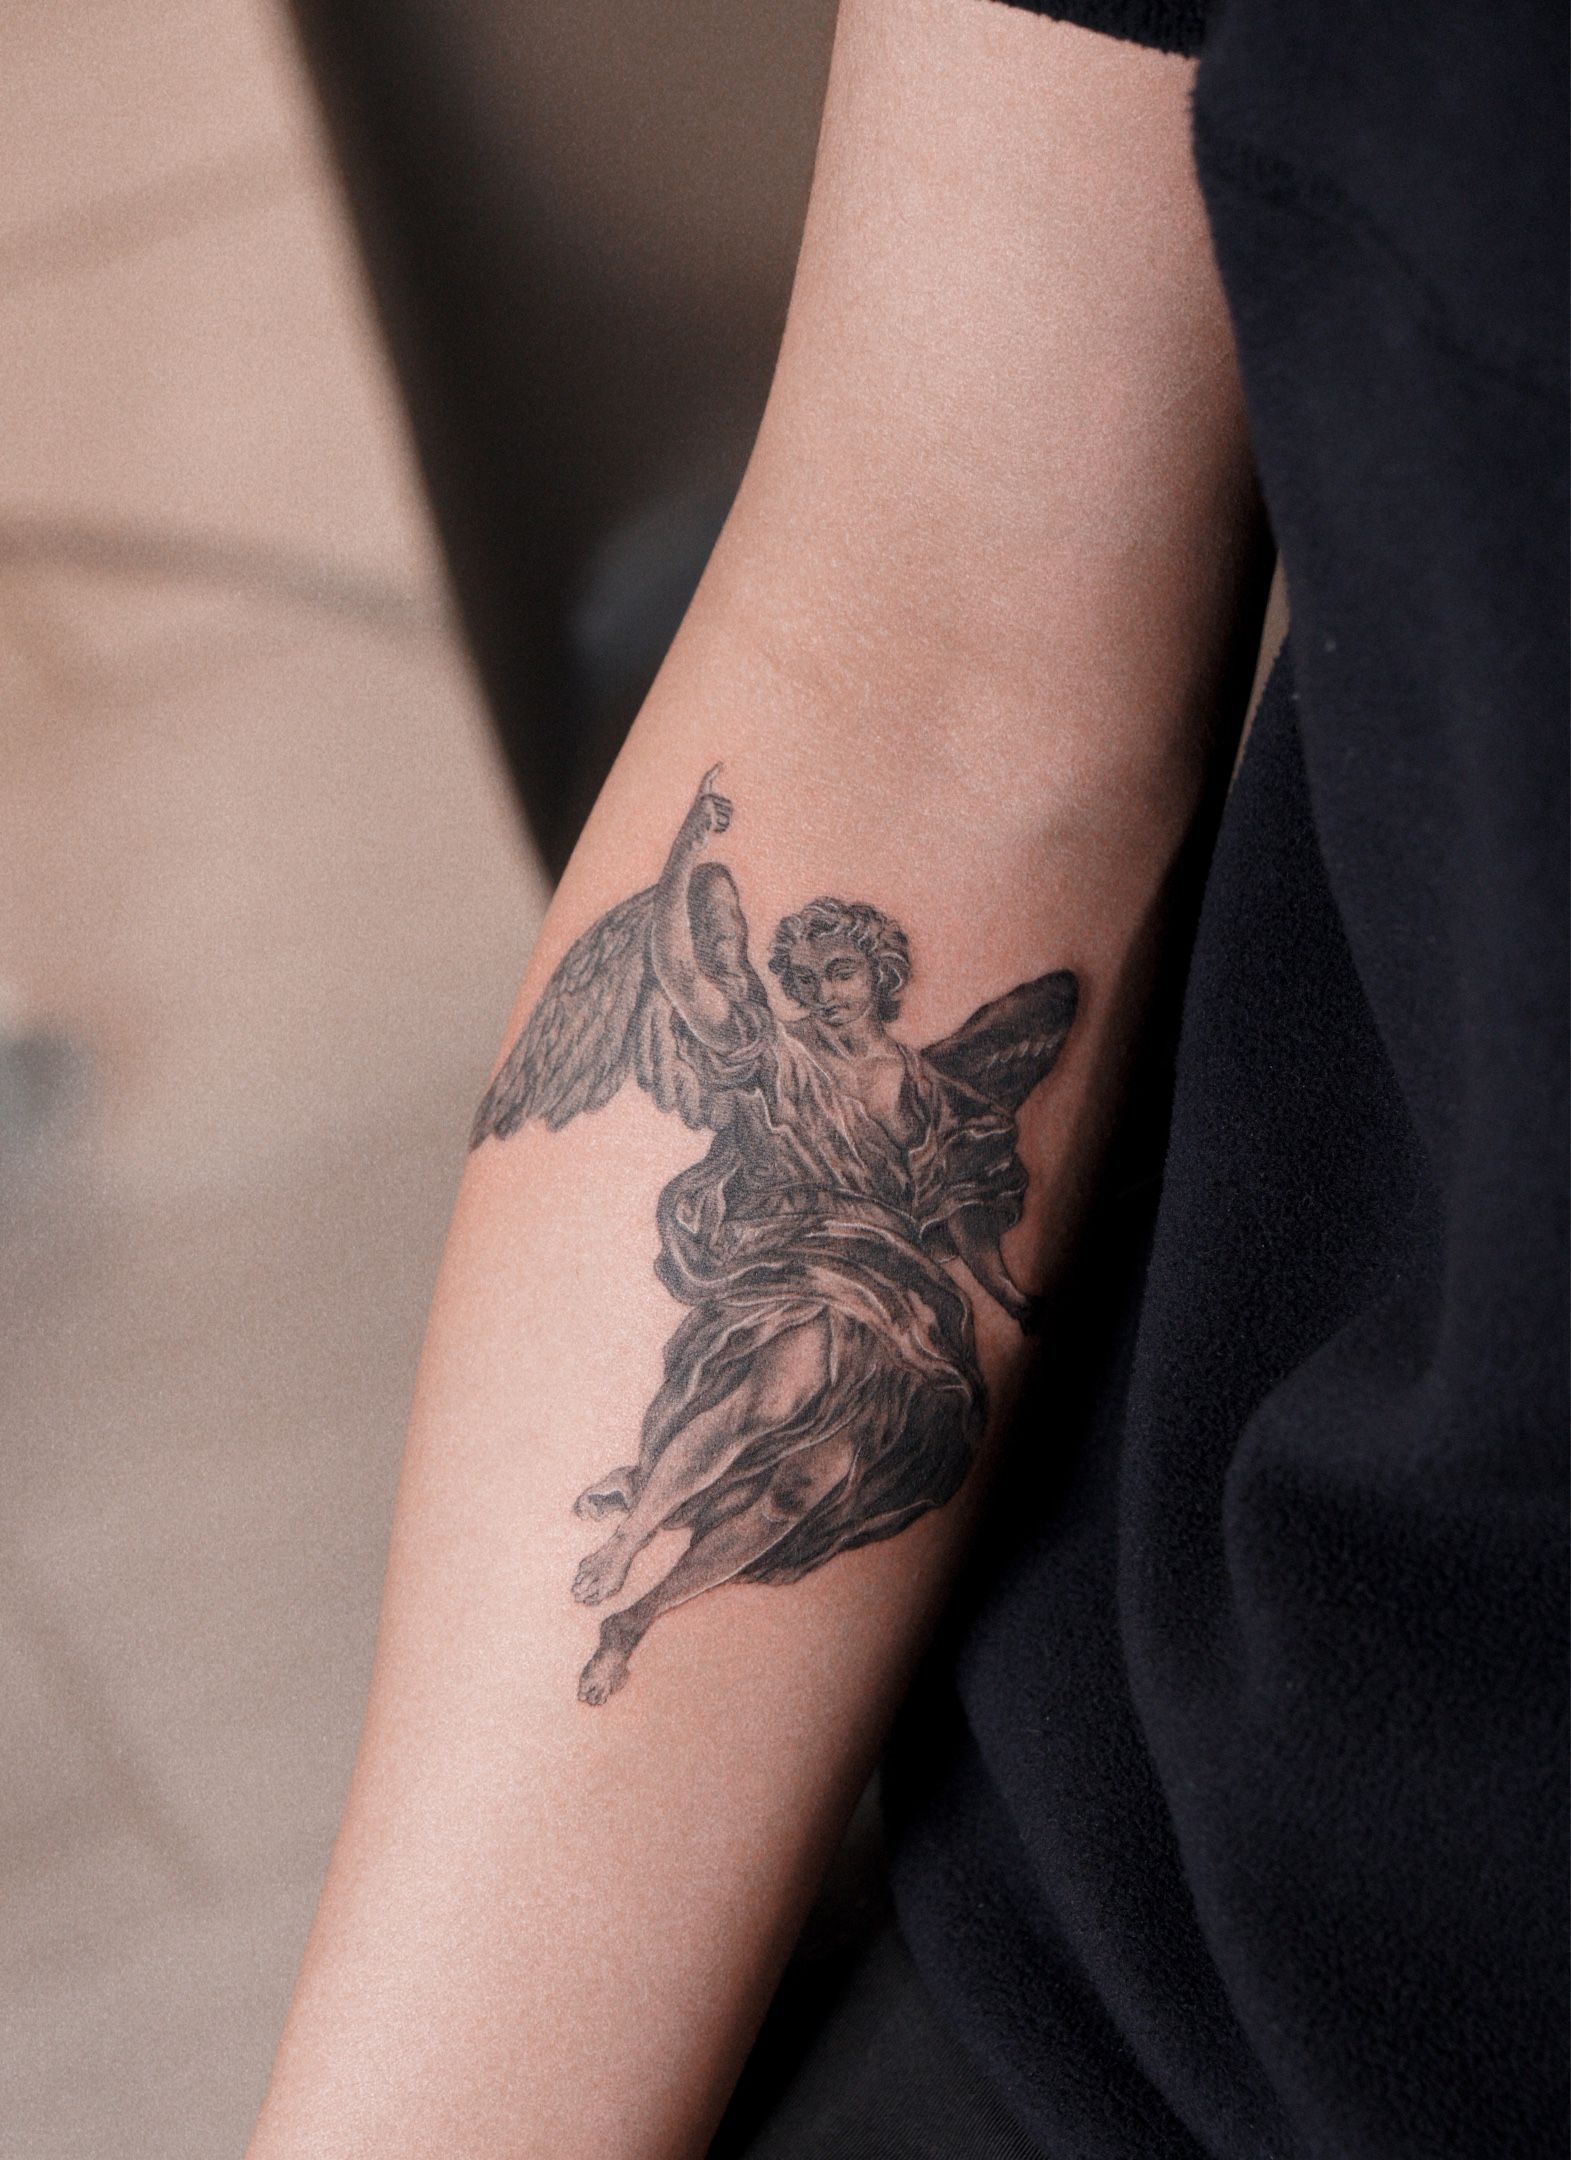 Tattoo uploaded by Eric Gaber • Archangel Gabriel tattoo • Tattoodo